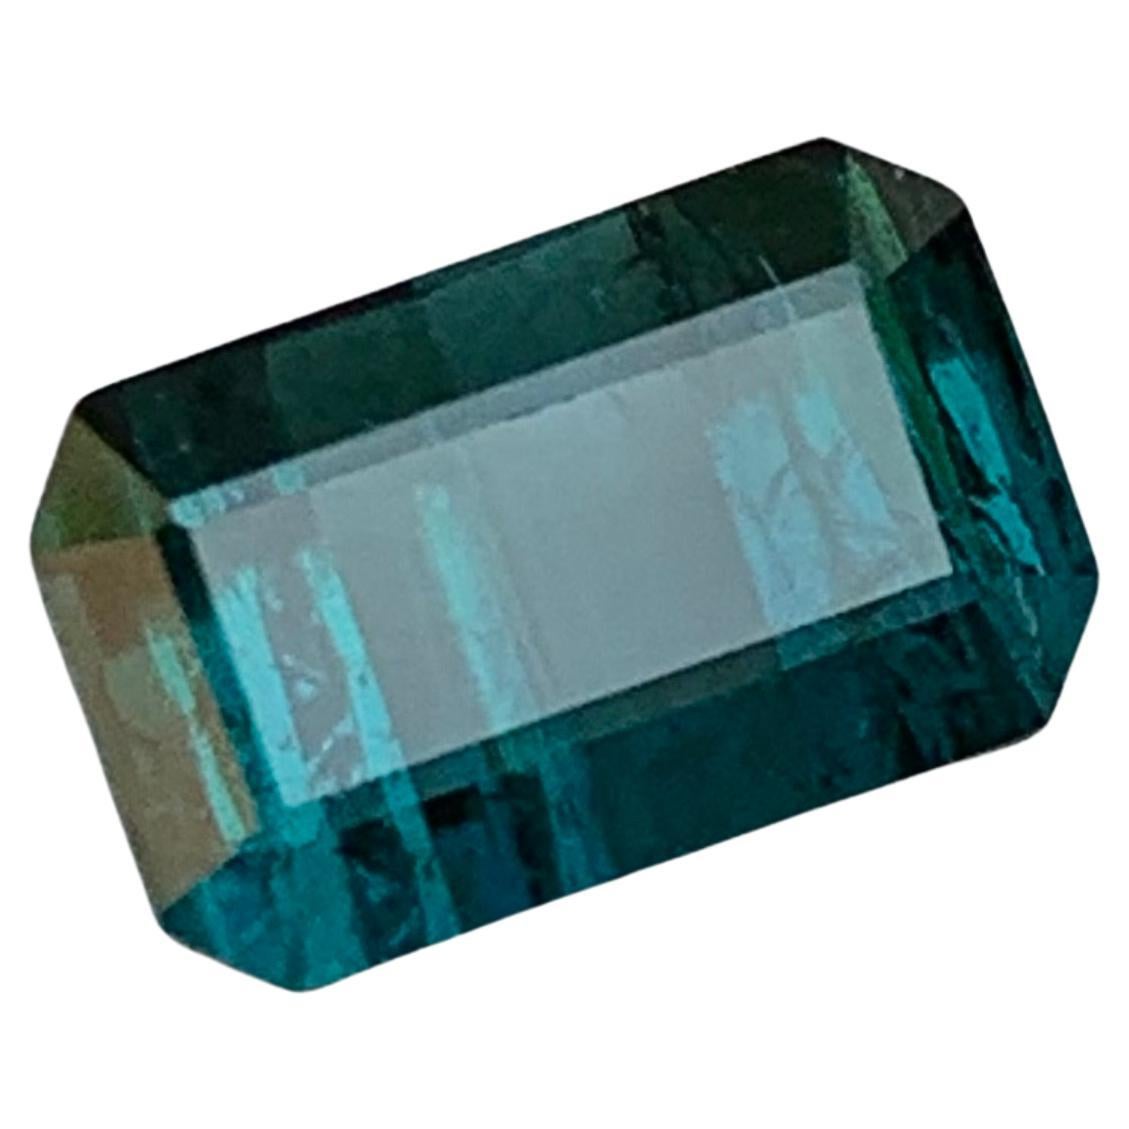 Rare Darkish Indicolite Blue Natural Tourmaline Gemstone, 2.35 Carat Emerald Cut